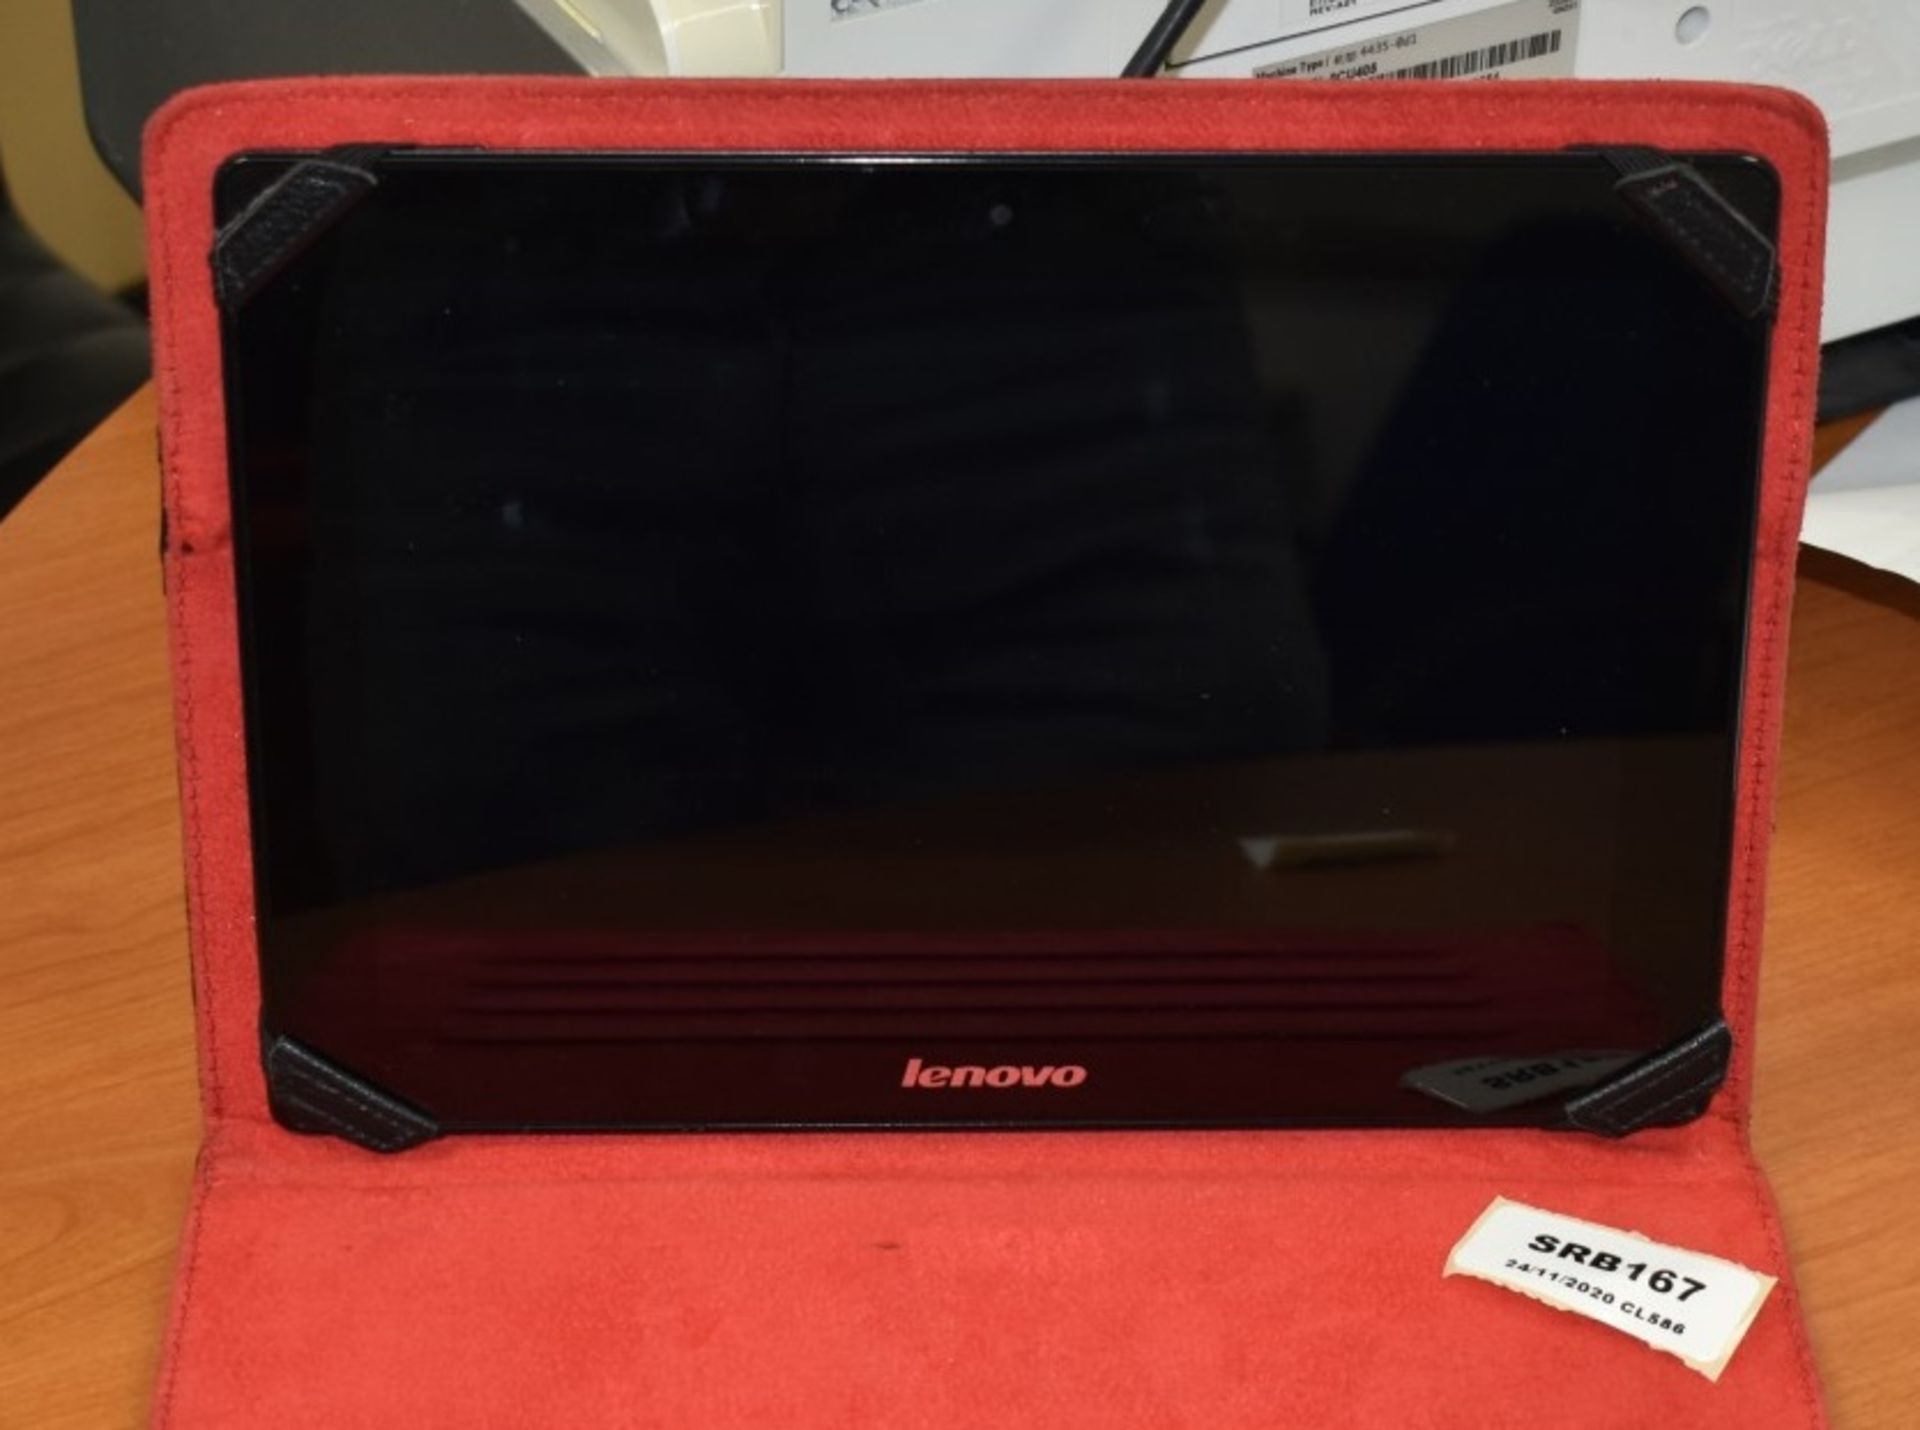 1 x Lenovo S6000 10.1inch Tablet Featuring a Quad Core 1.2GHz Processor, 1GB RAM, 32GB Storage